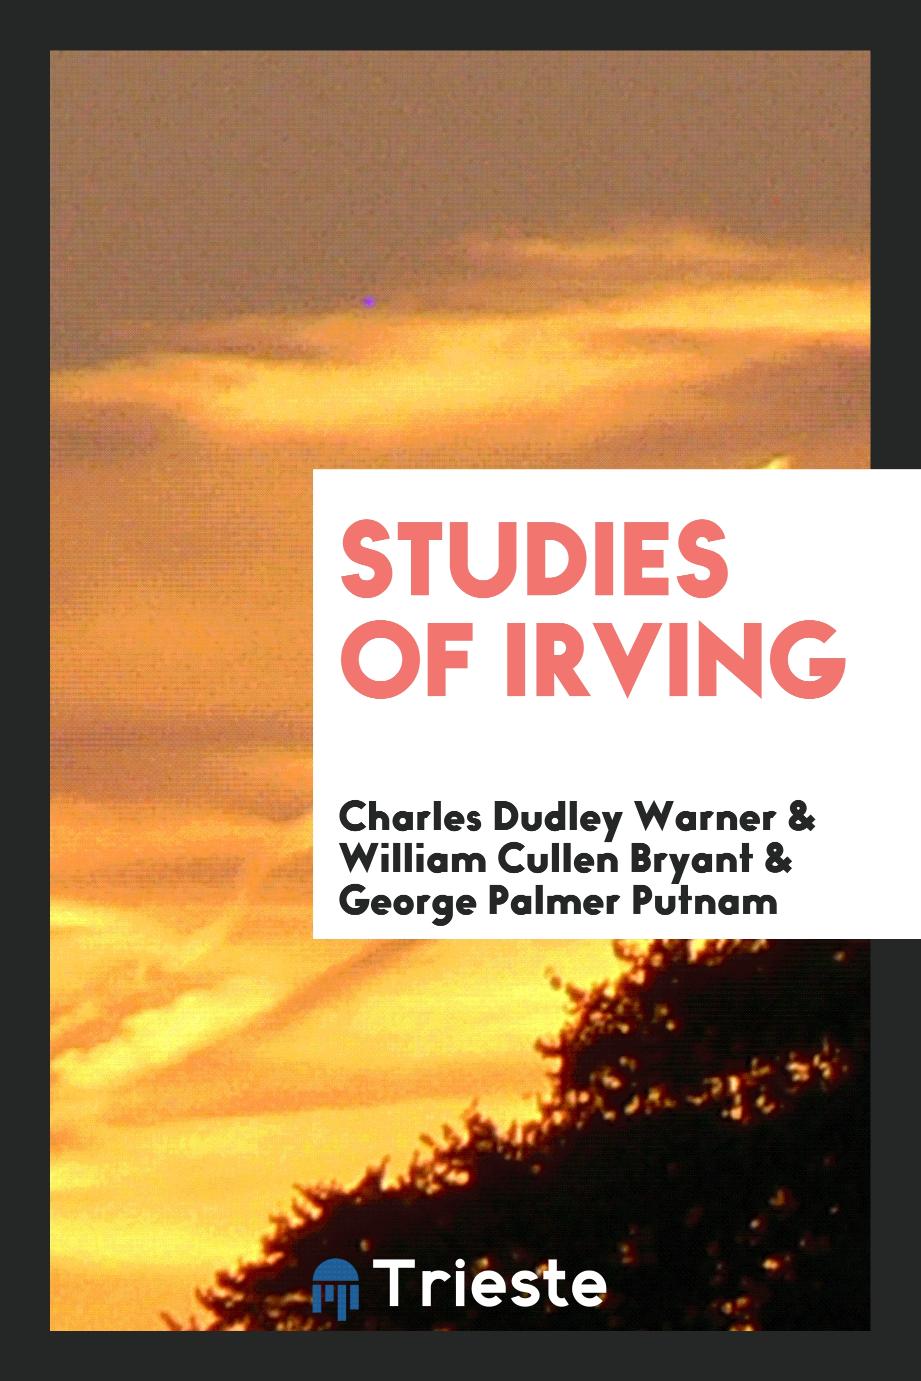 Studies of Irving